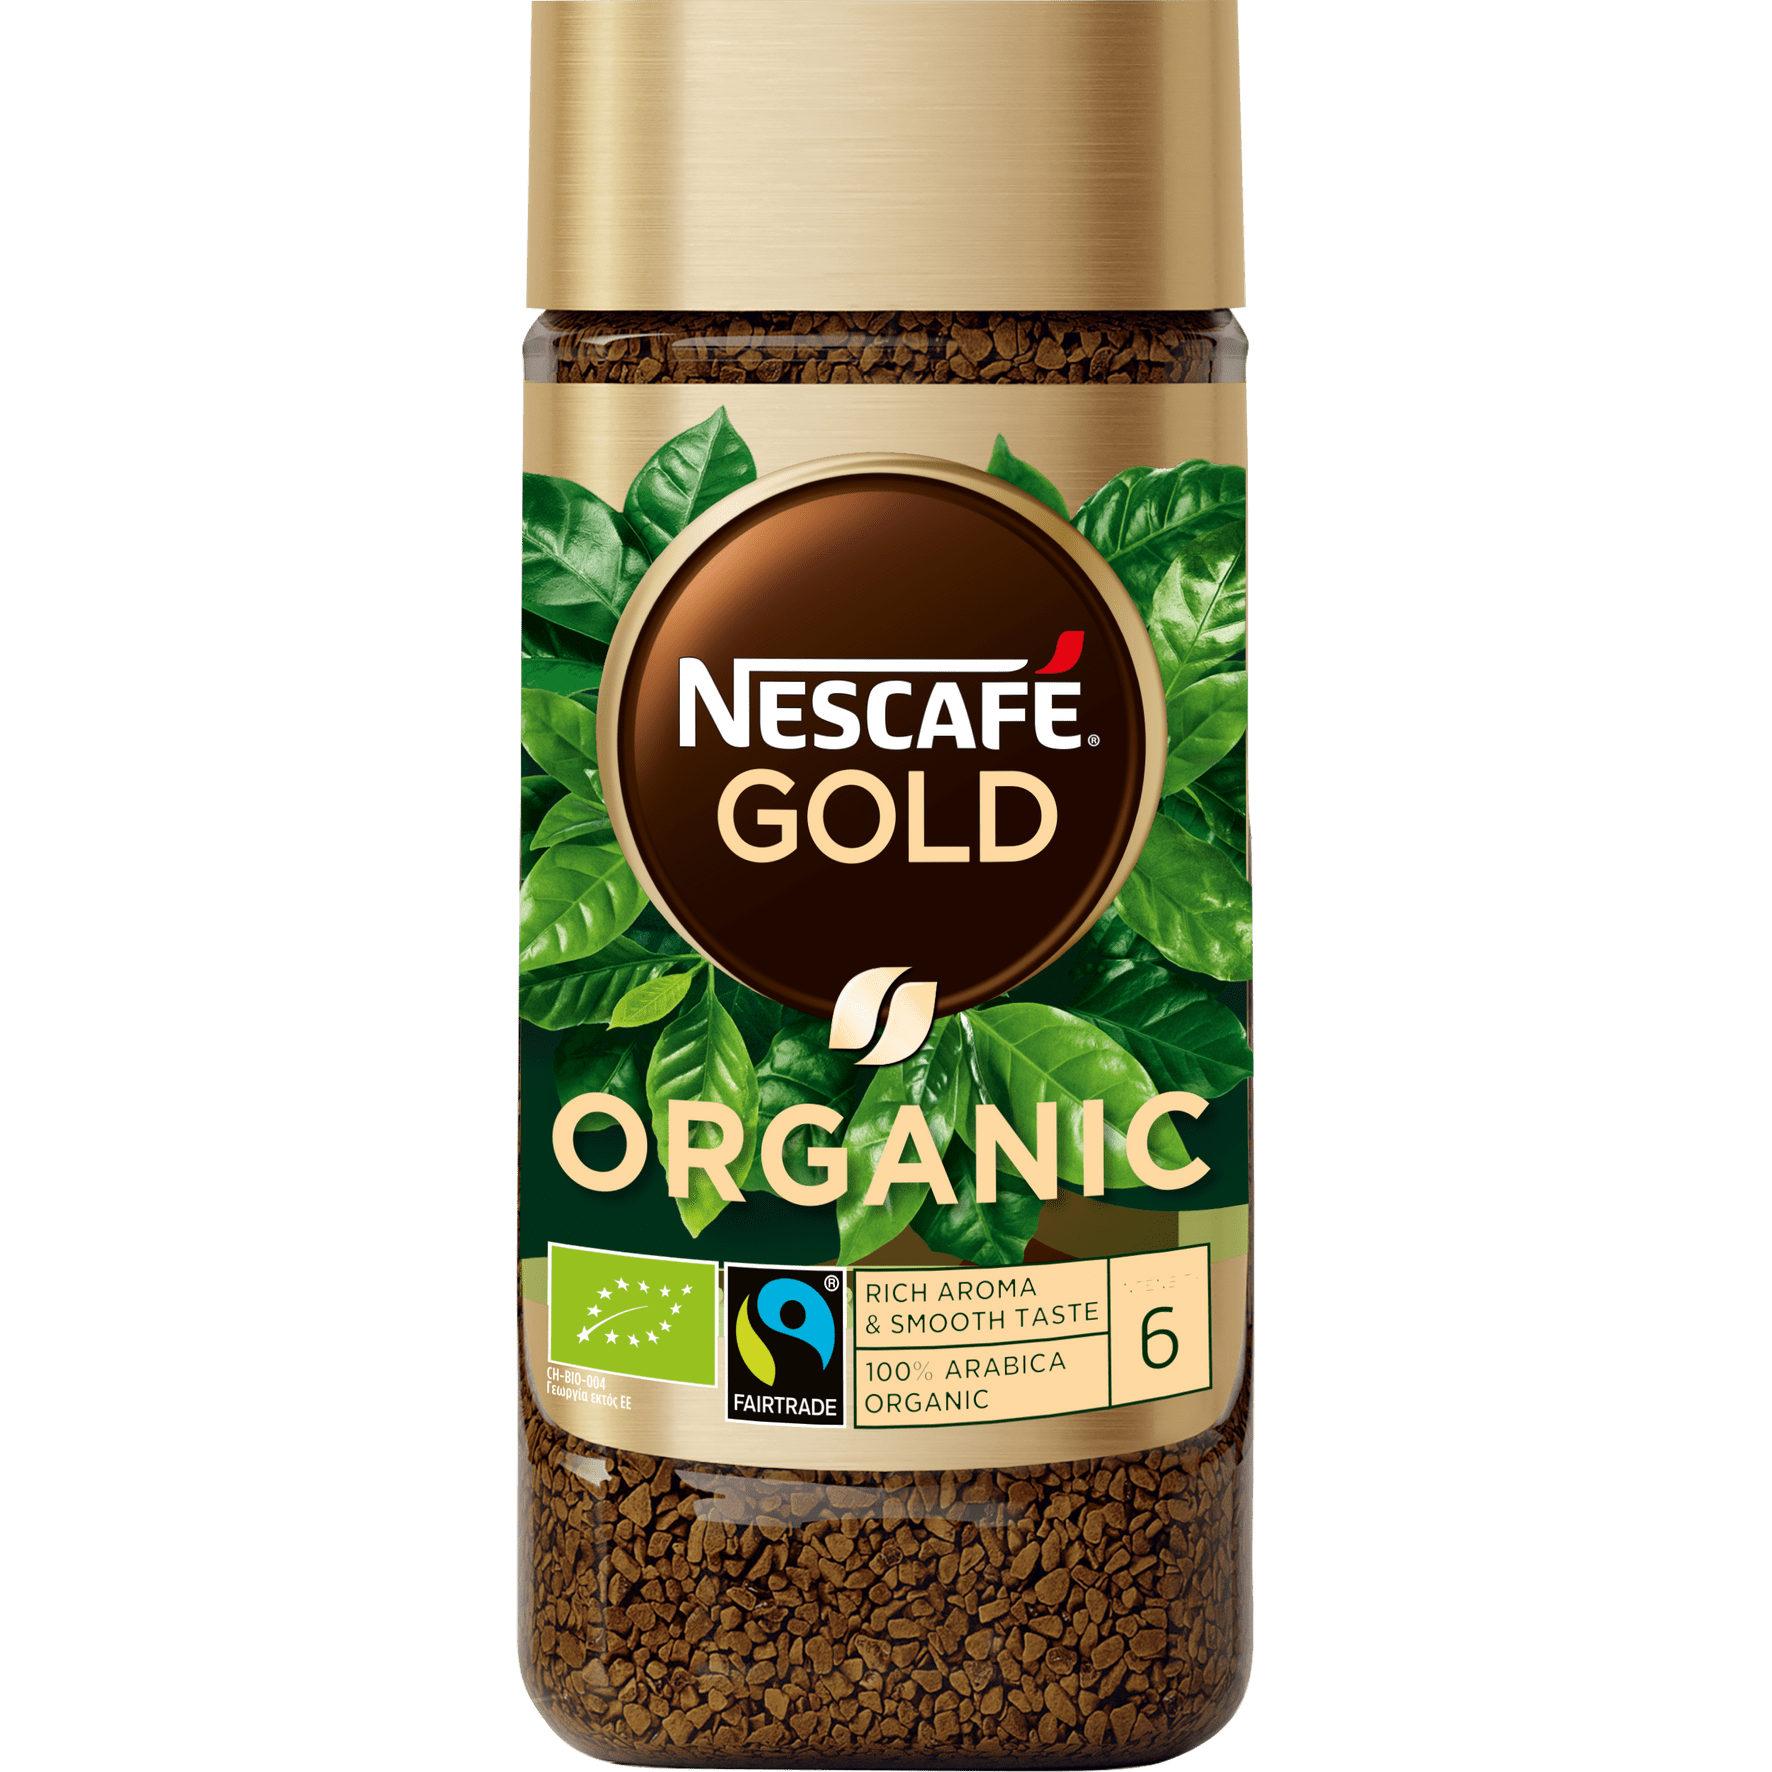 Nescafe gold bio στιγμιαίος